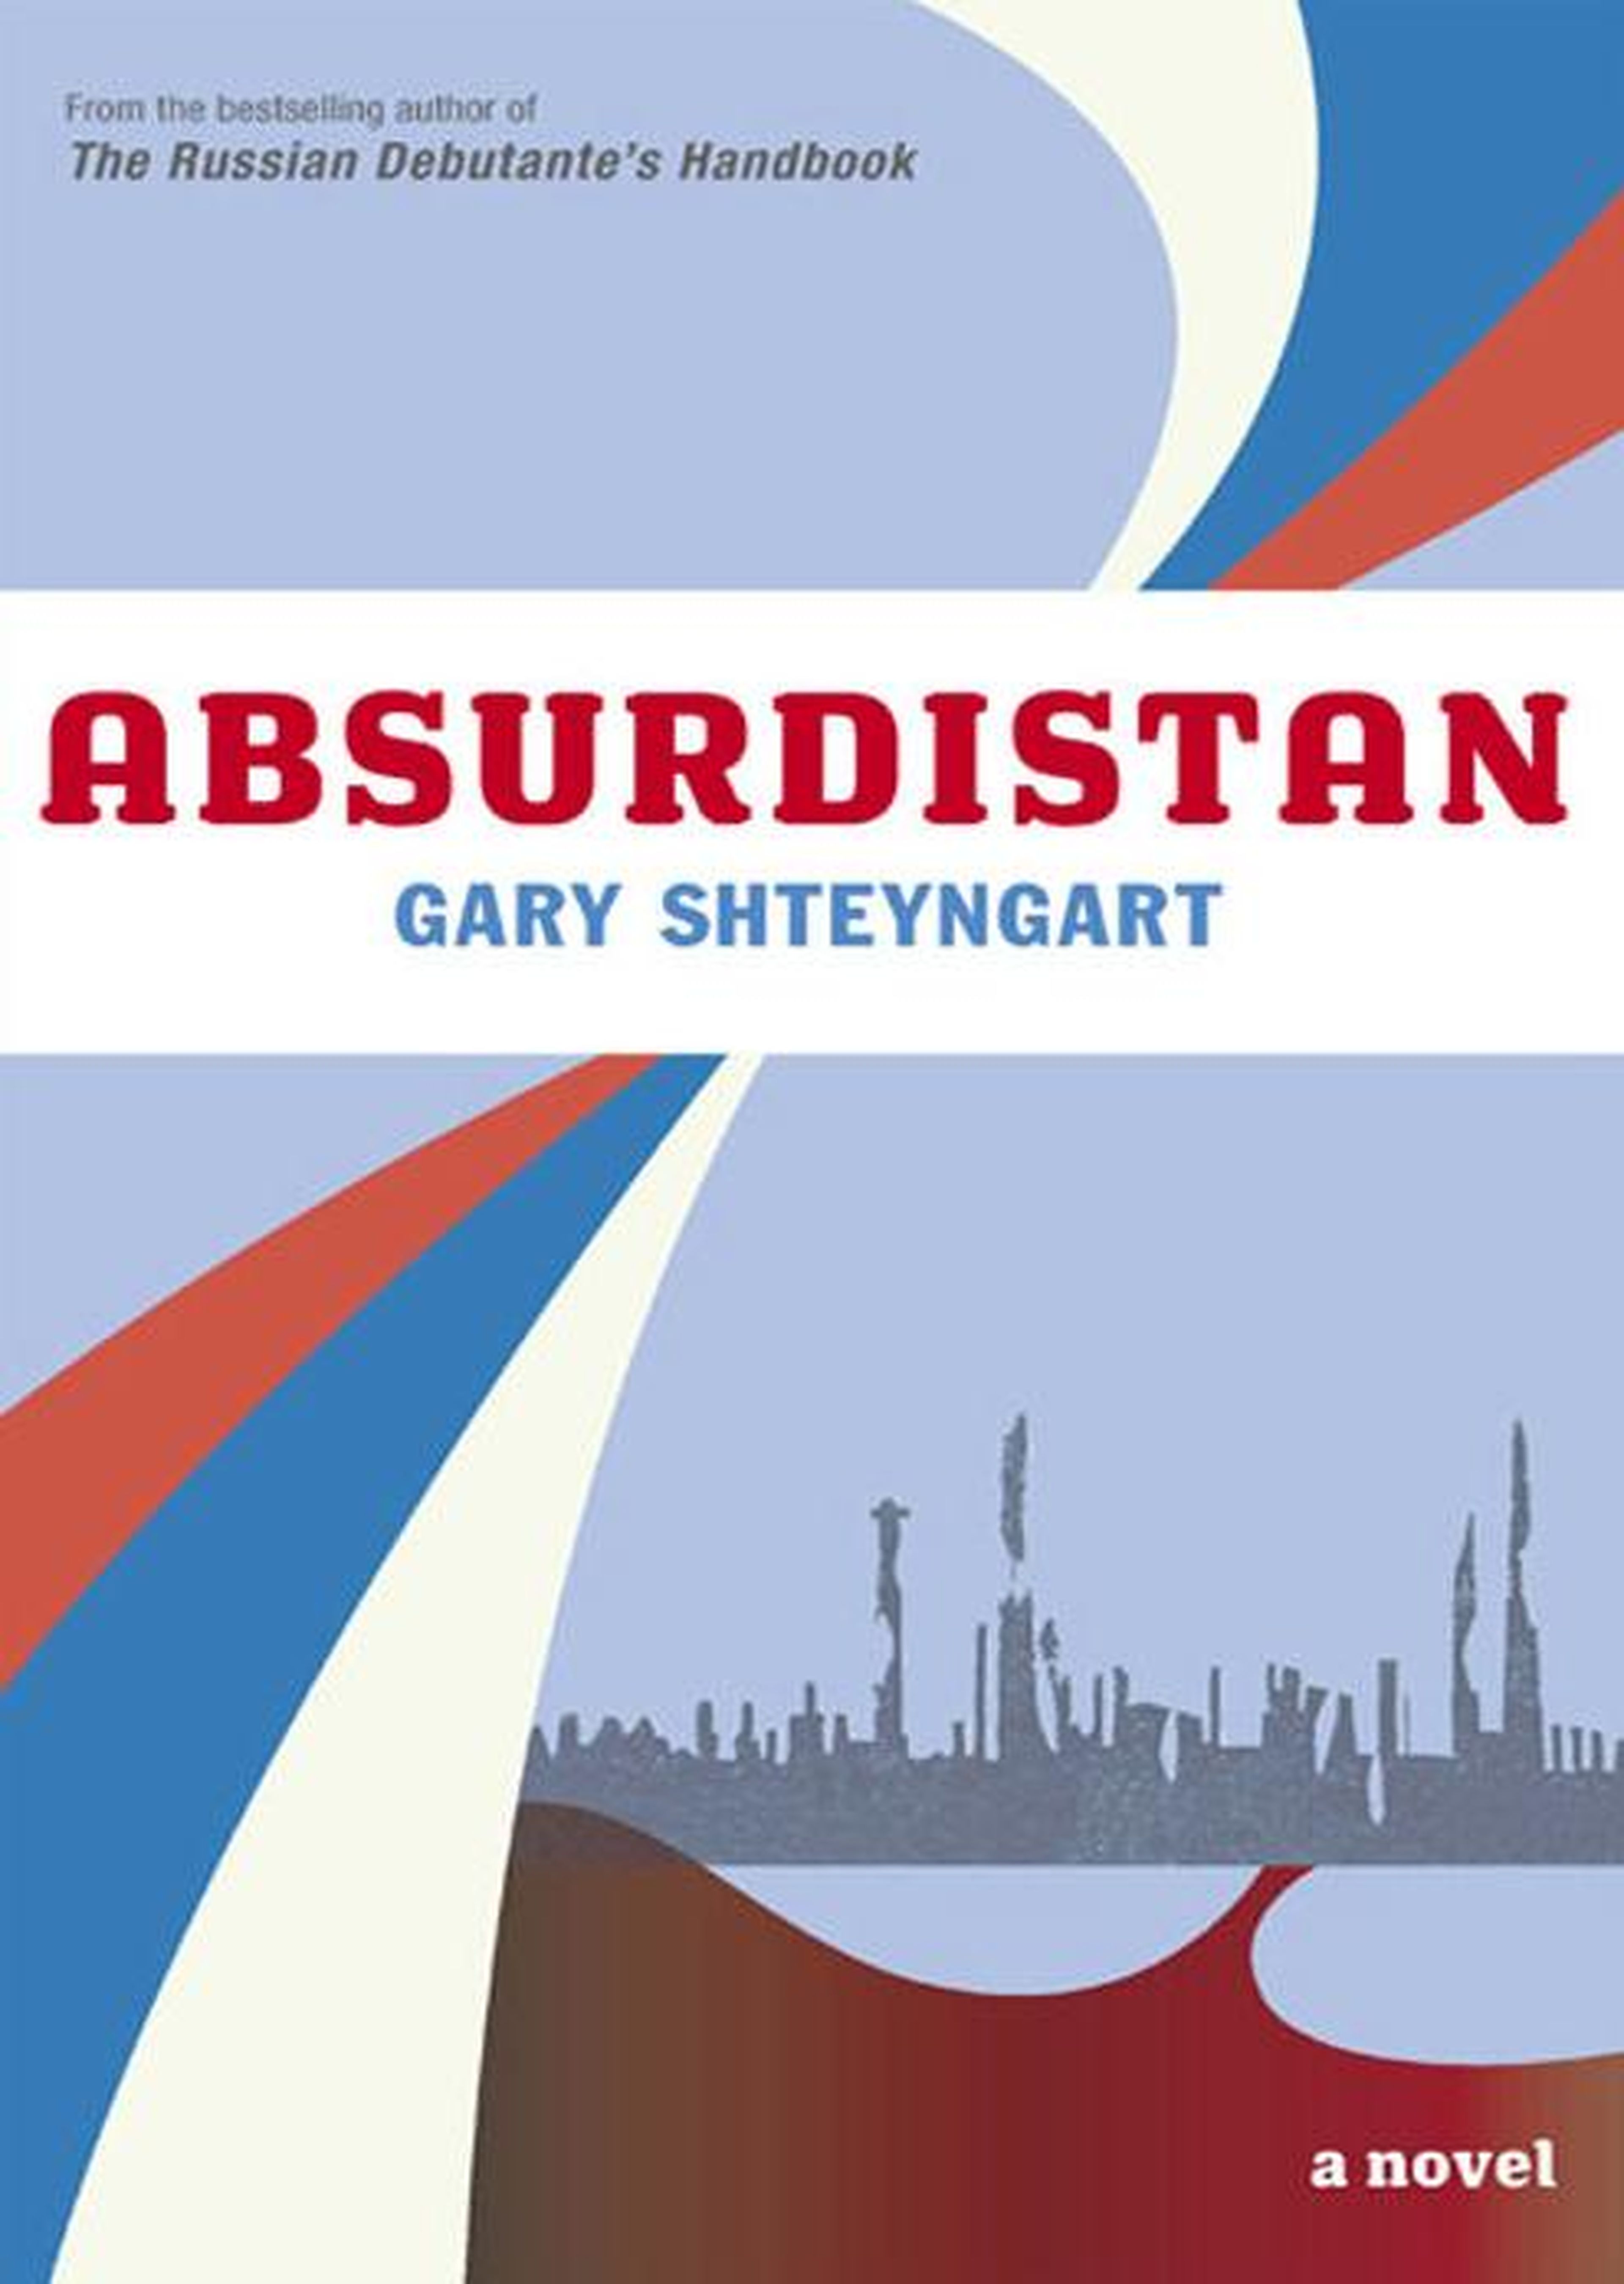 Siddhartha Mukherjee: "Absurdistan" by Gary Shteyngart